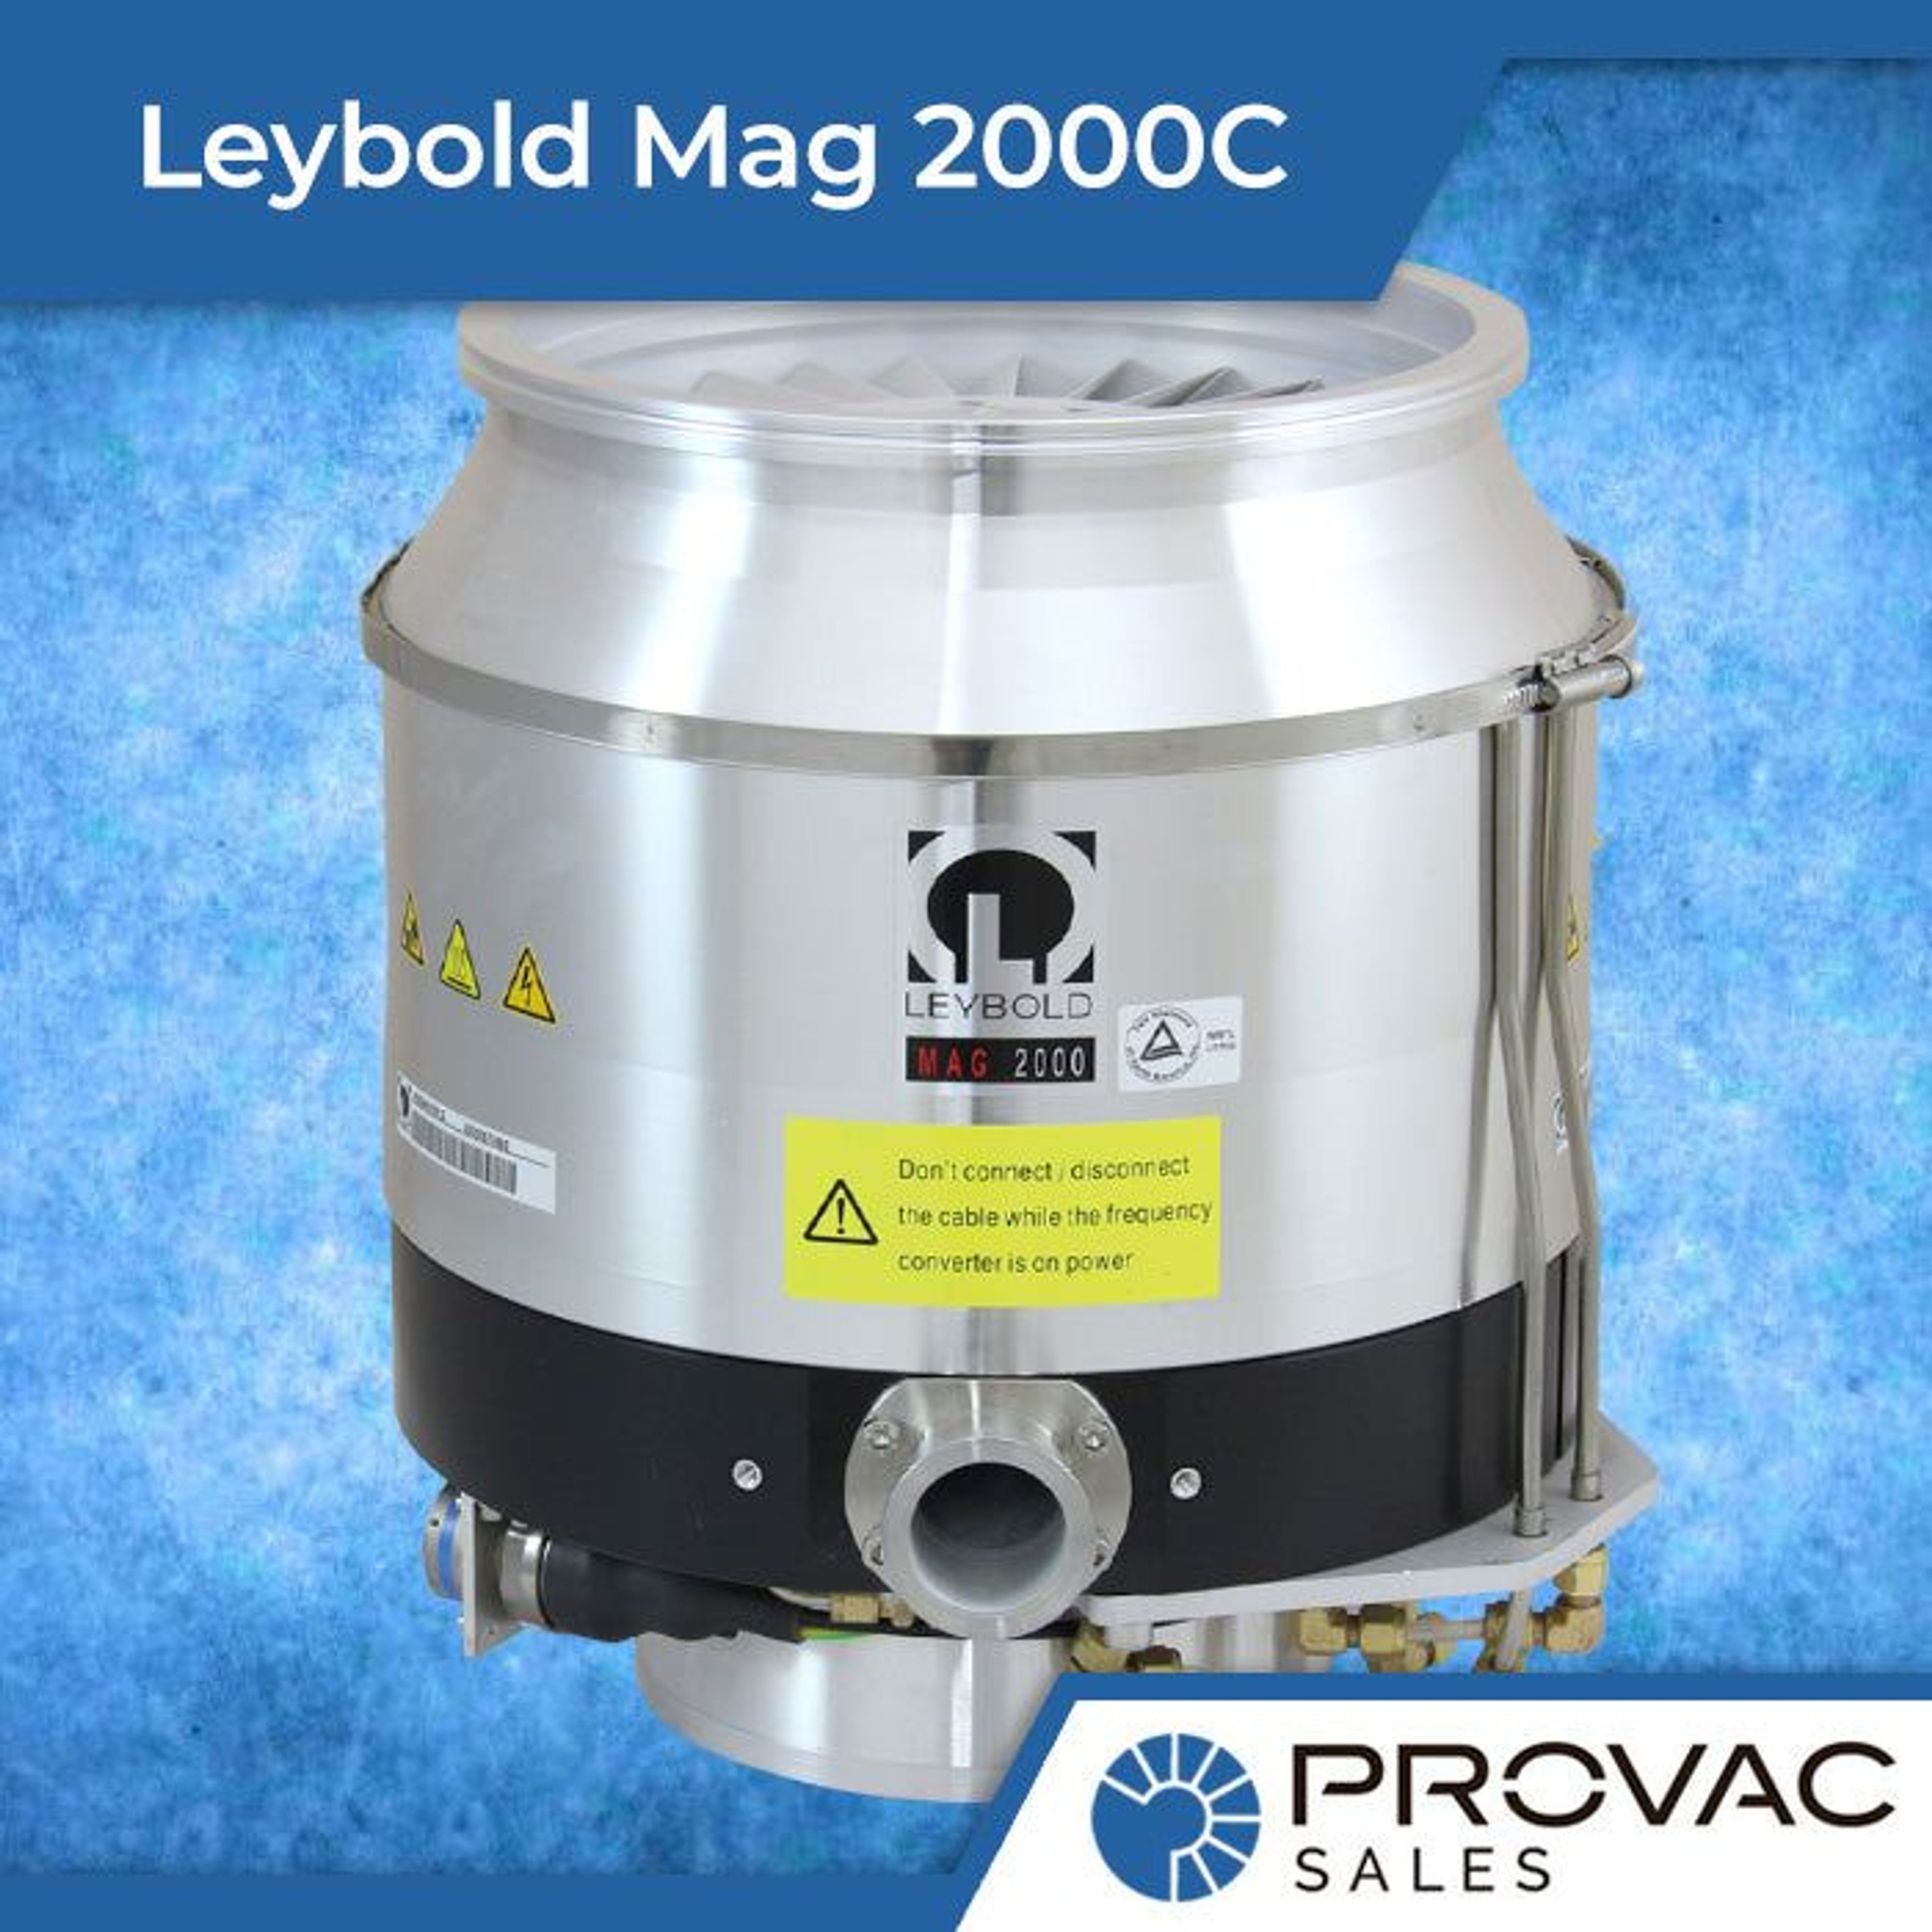 Leybold Mag 2000C Turbomolecular Pump Background